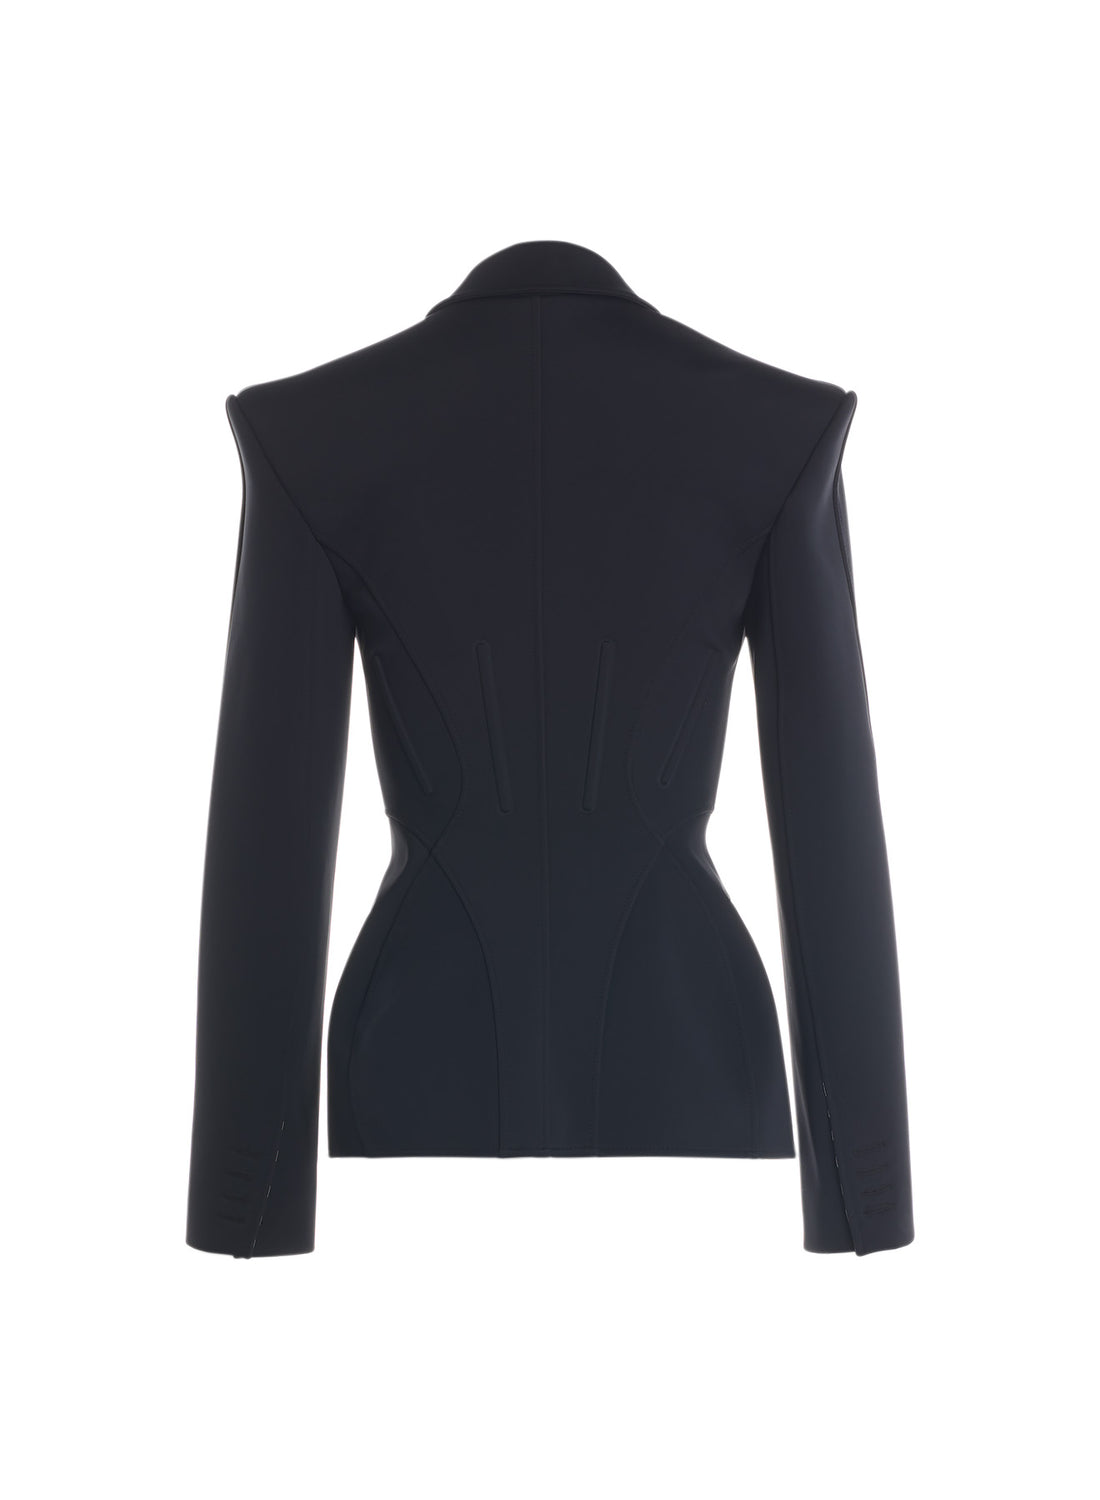 Fitted corset jacket | MUGLER Official Website – Mugler